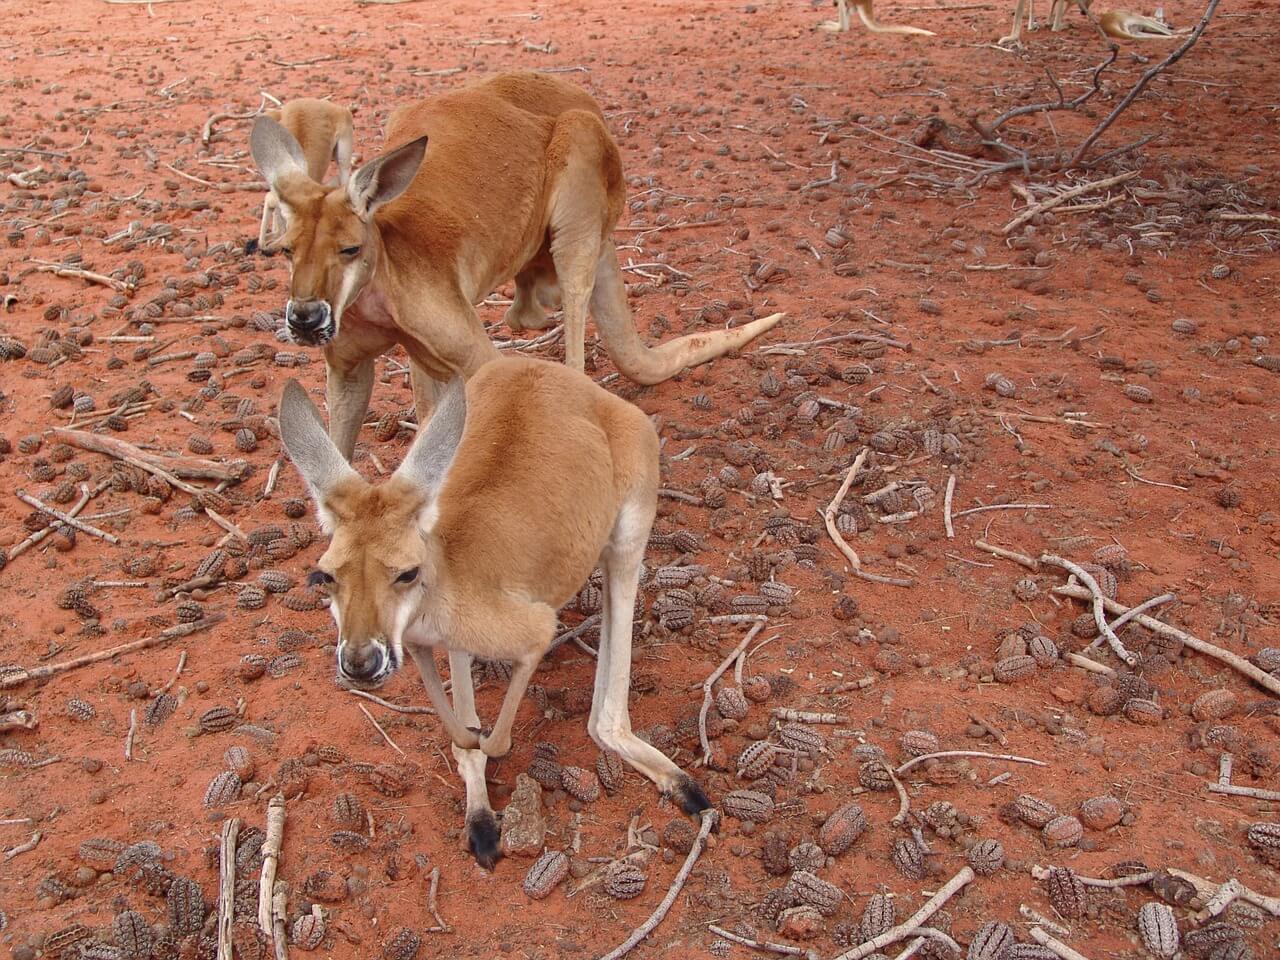 //pixabay.com/photos/kangaroo-red-large-australia-261739/